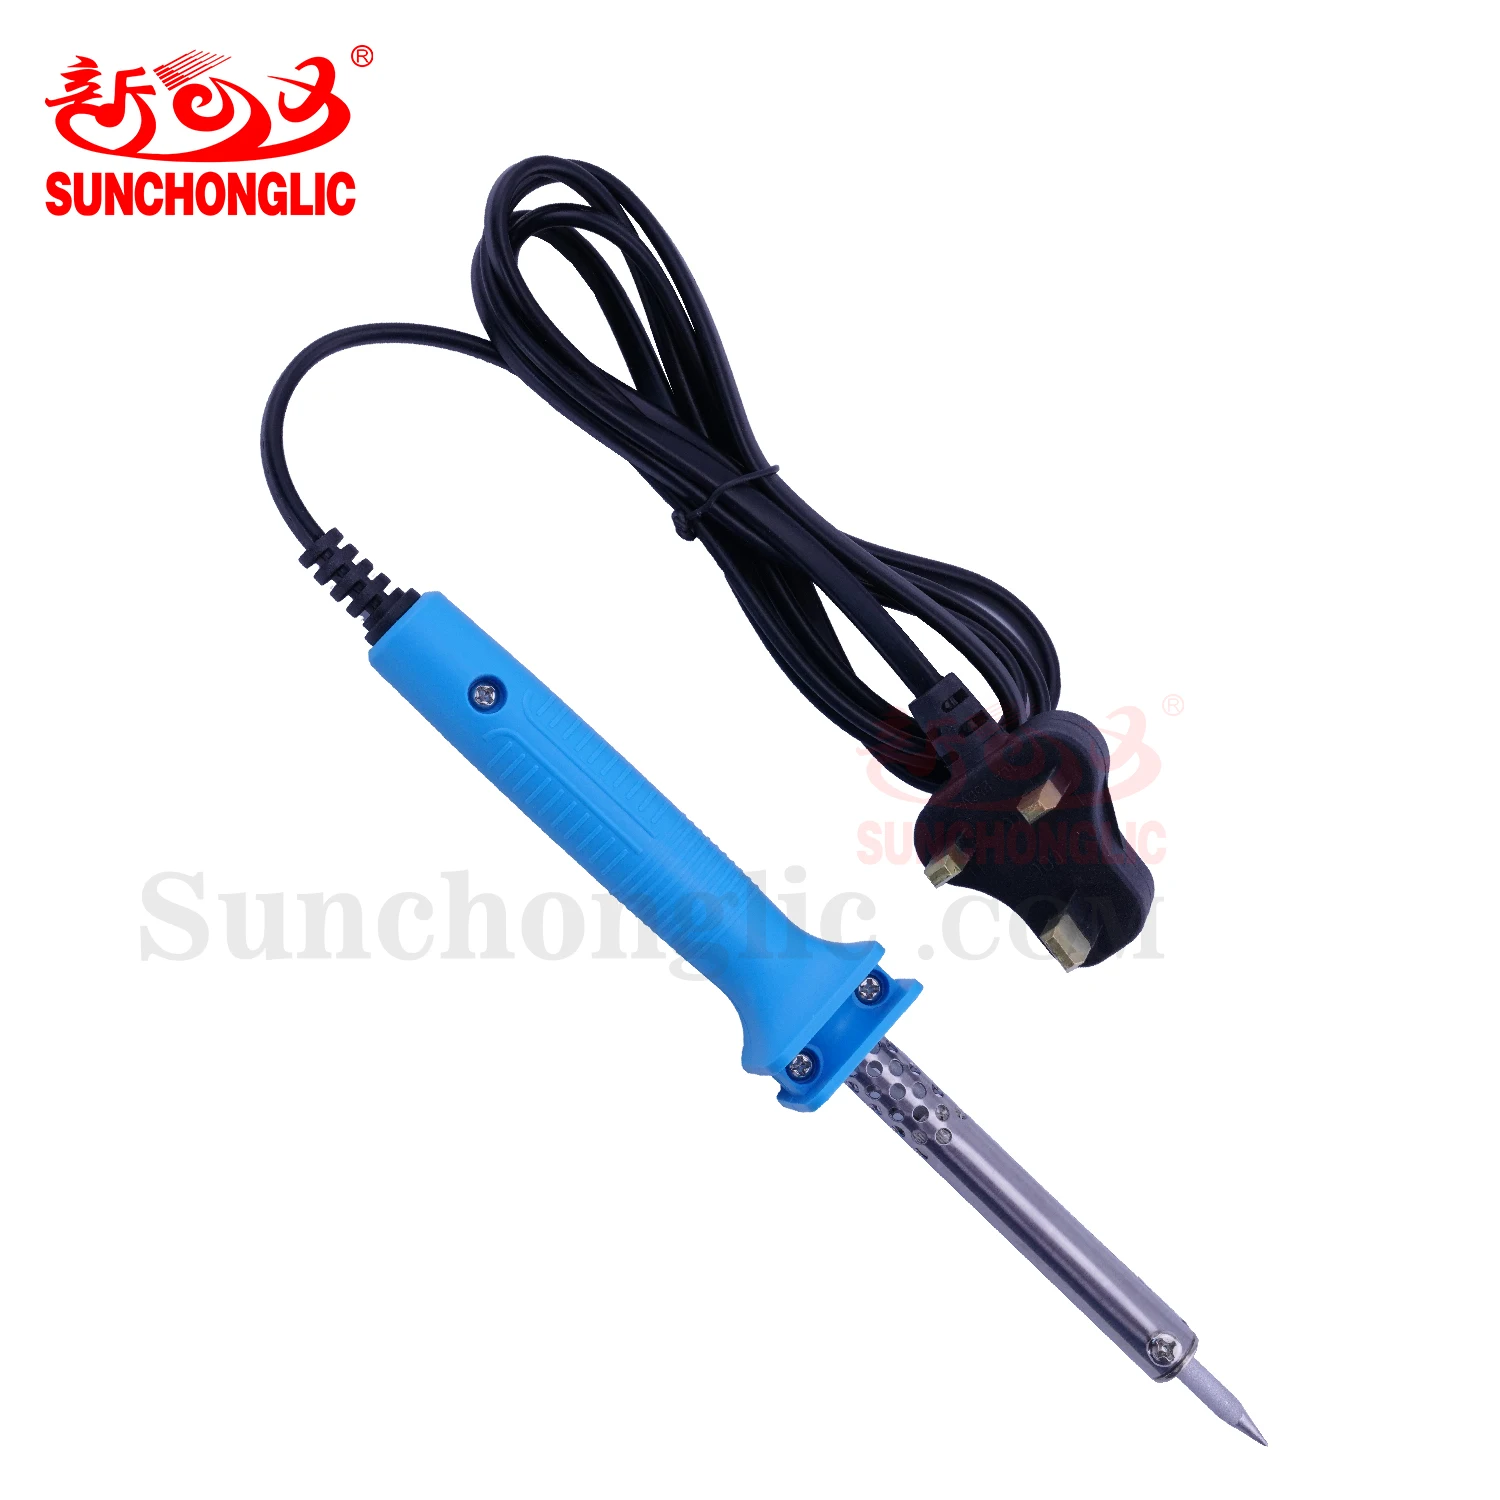 Sunchonglic wholesale manufacturer 40w soldering iron